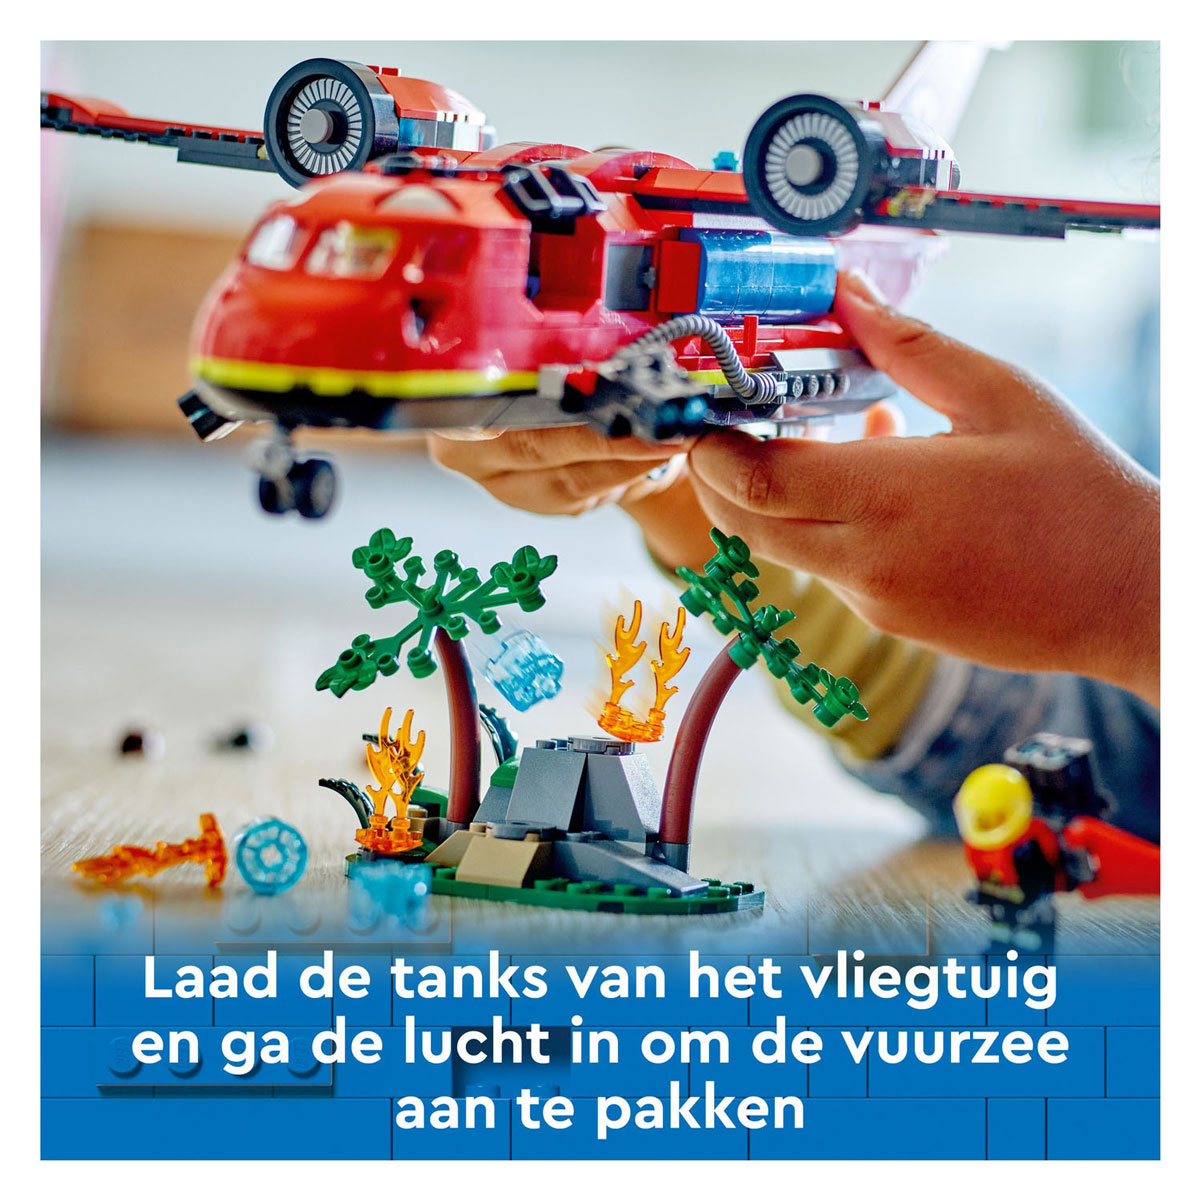 LEGO City 60413 Feuerwehrflugzeug